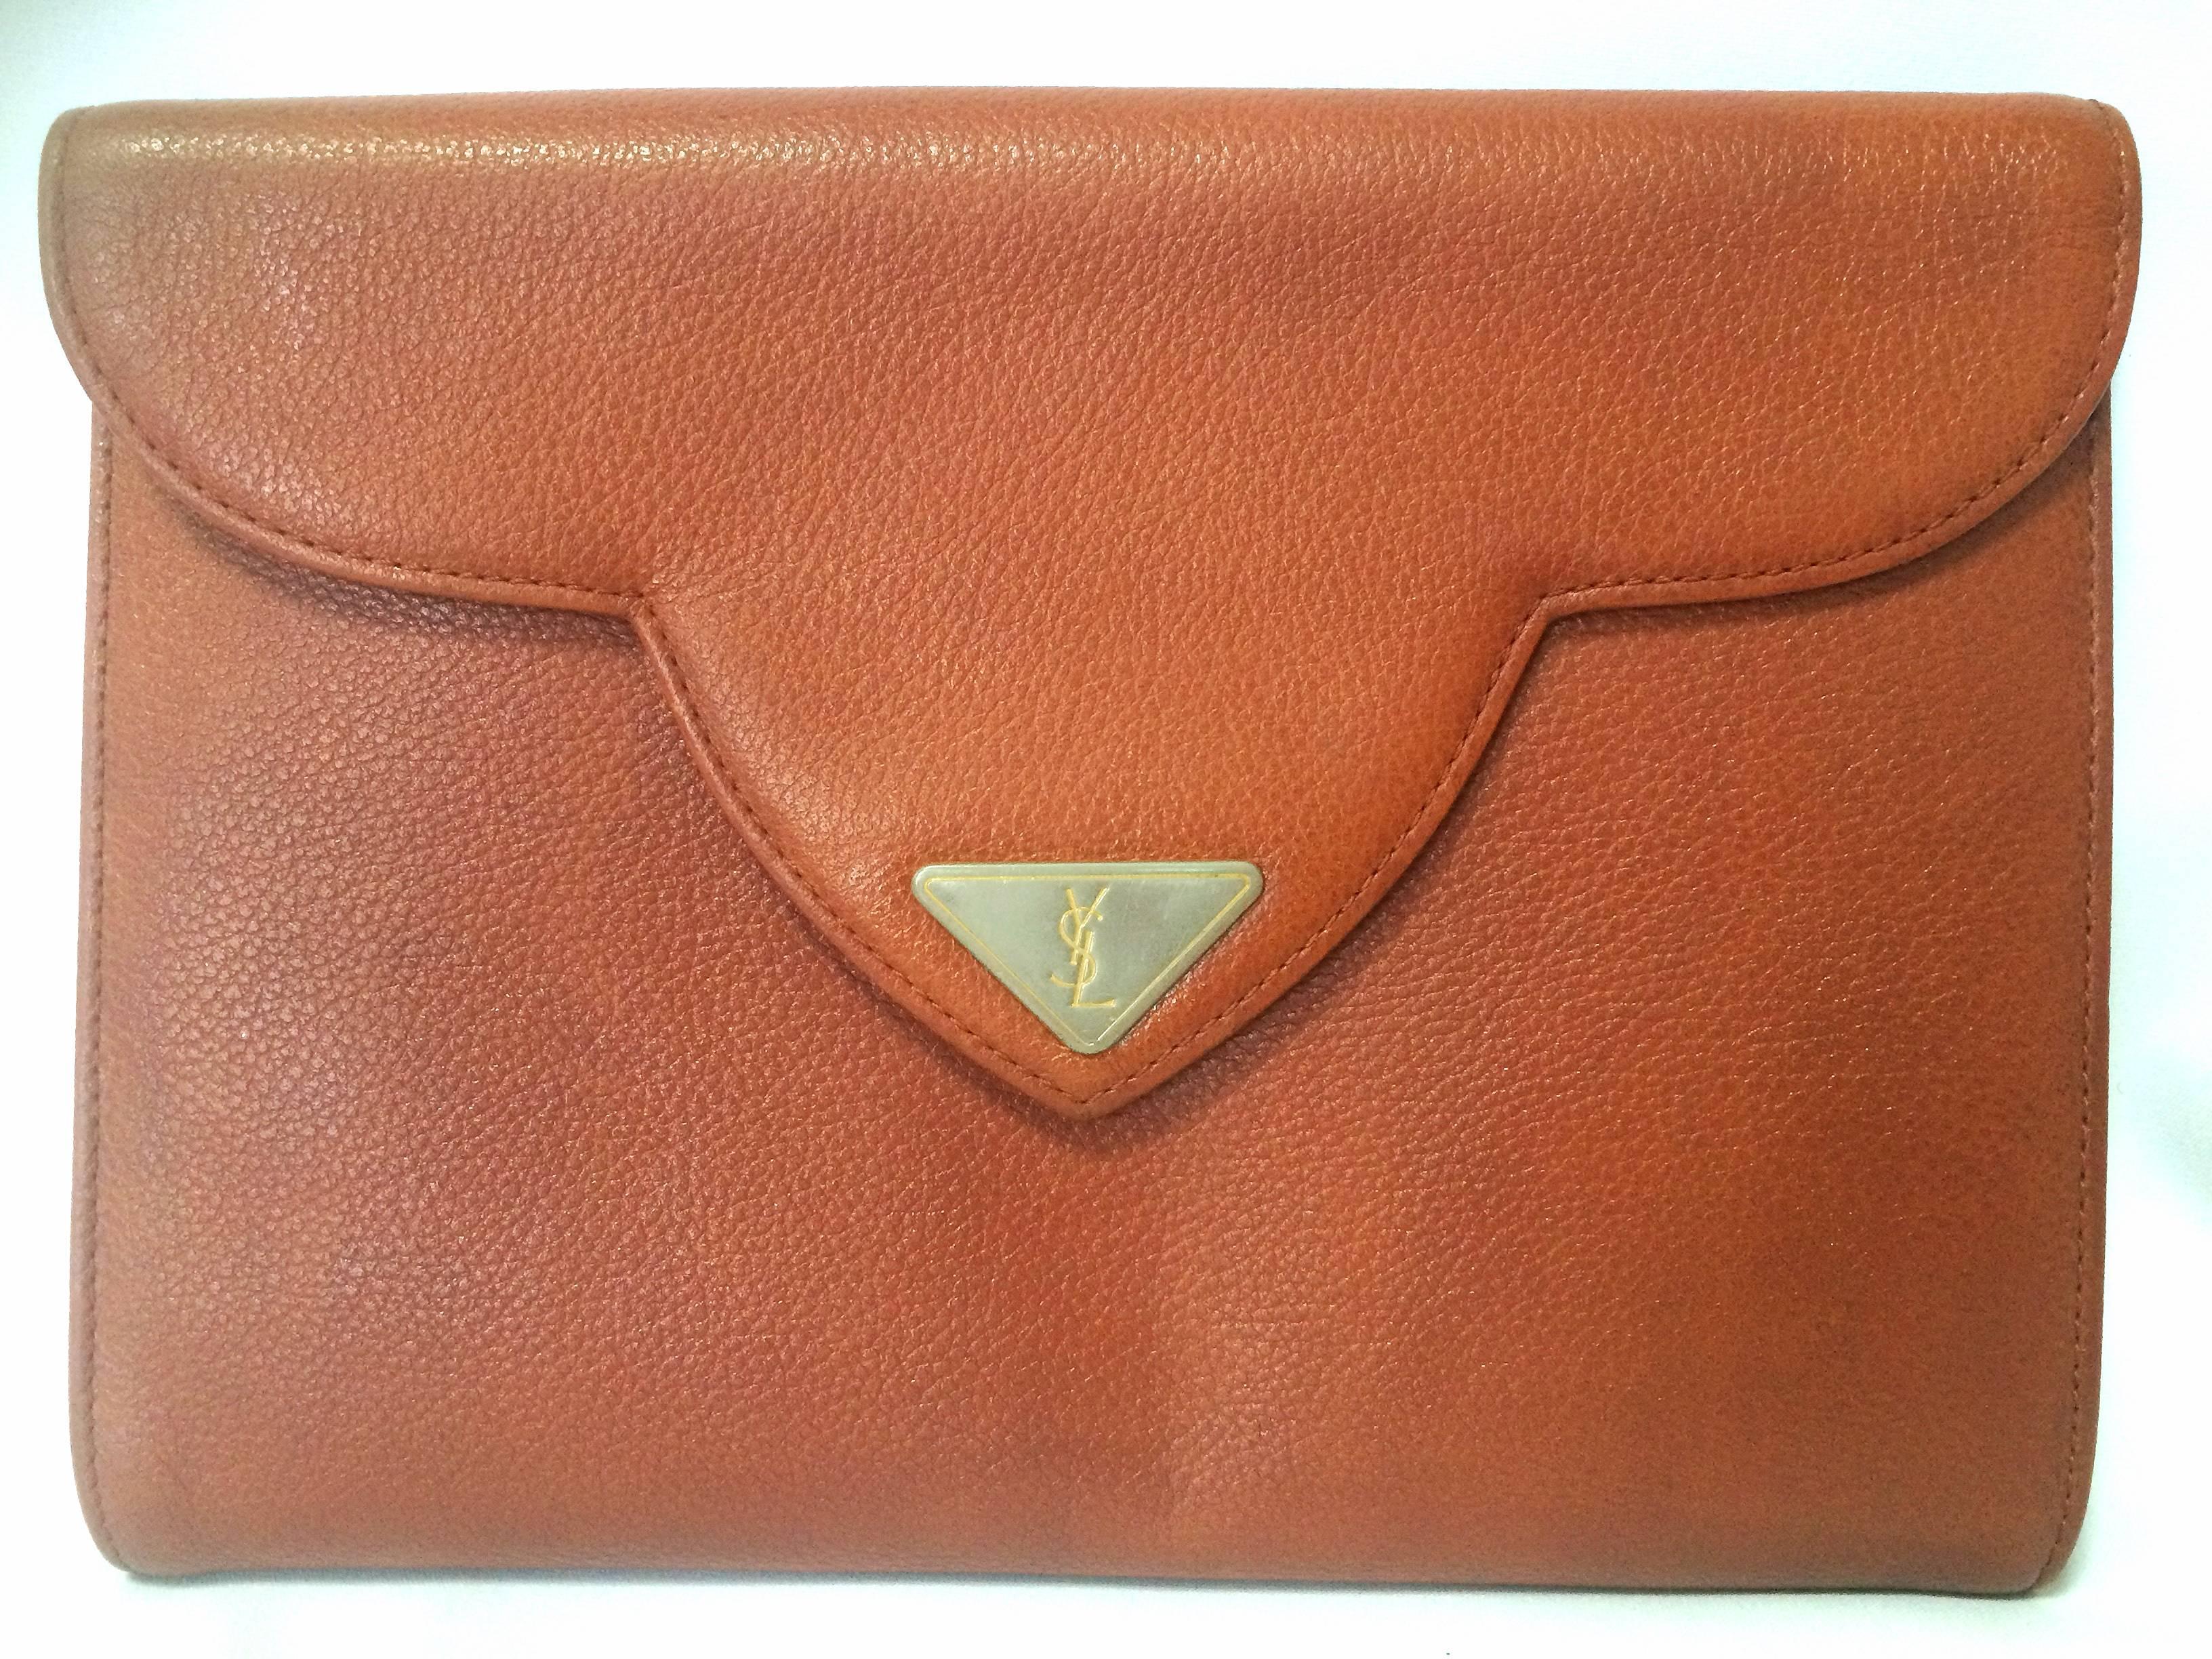 Vintage Yves Saint Laurent genuine brown leather clutch purse with beak tip flap 3